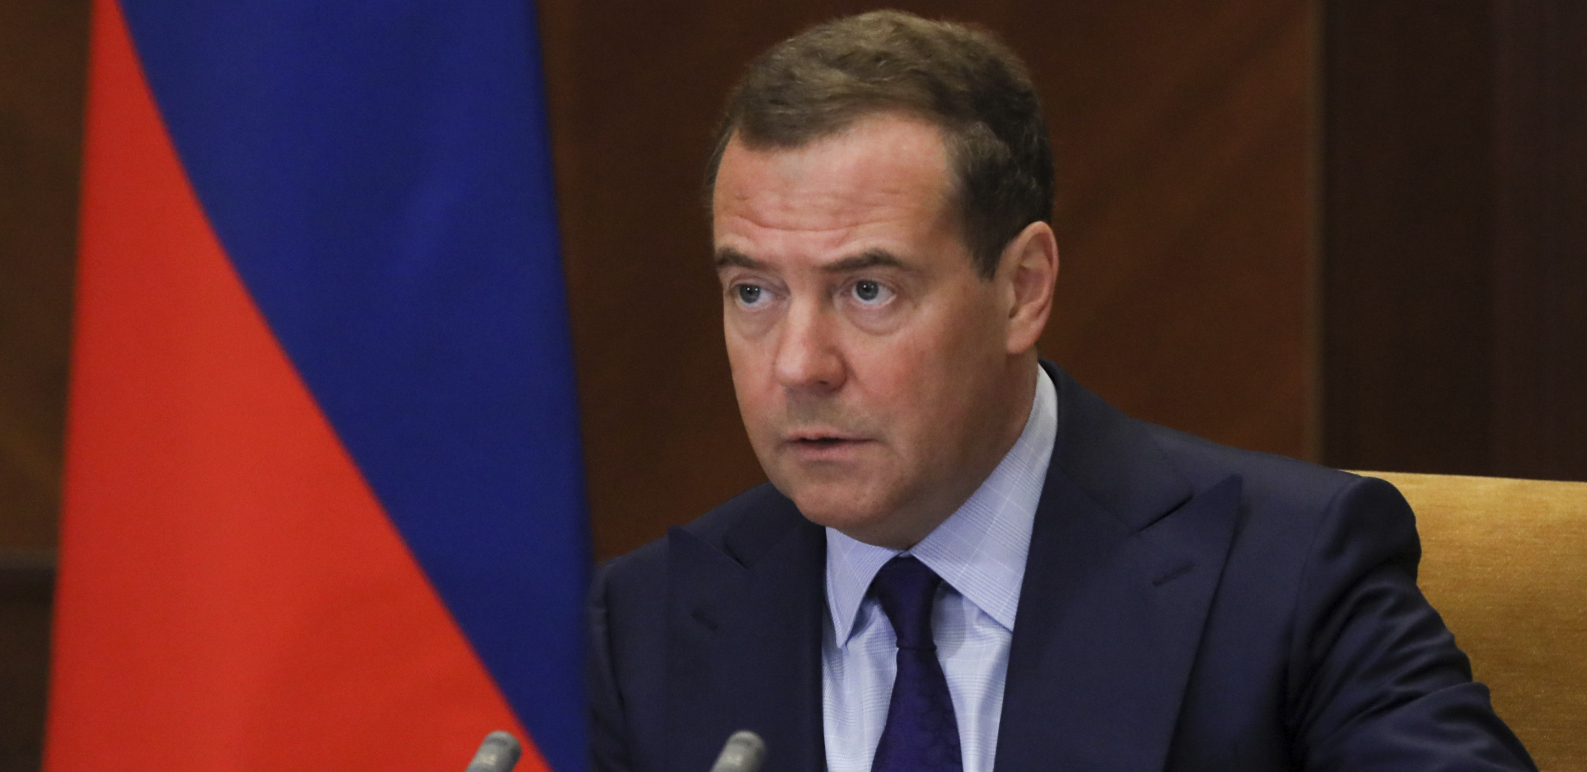 STIGAO POZIV IZ KIJEVA "DA SE UNIŠTI RUSIJA" Medvedev odgovorio jasno i brutalno!